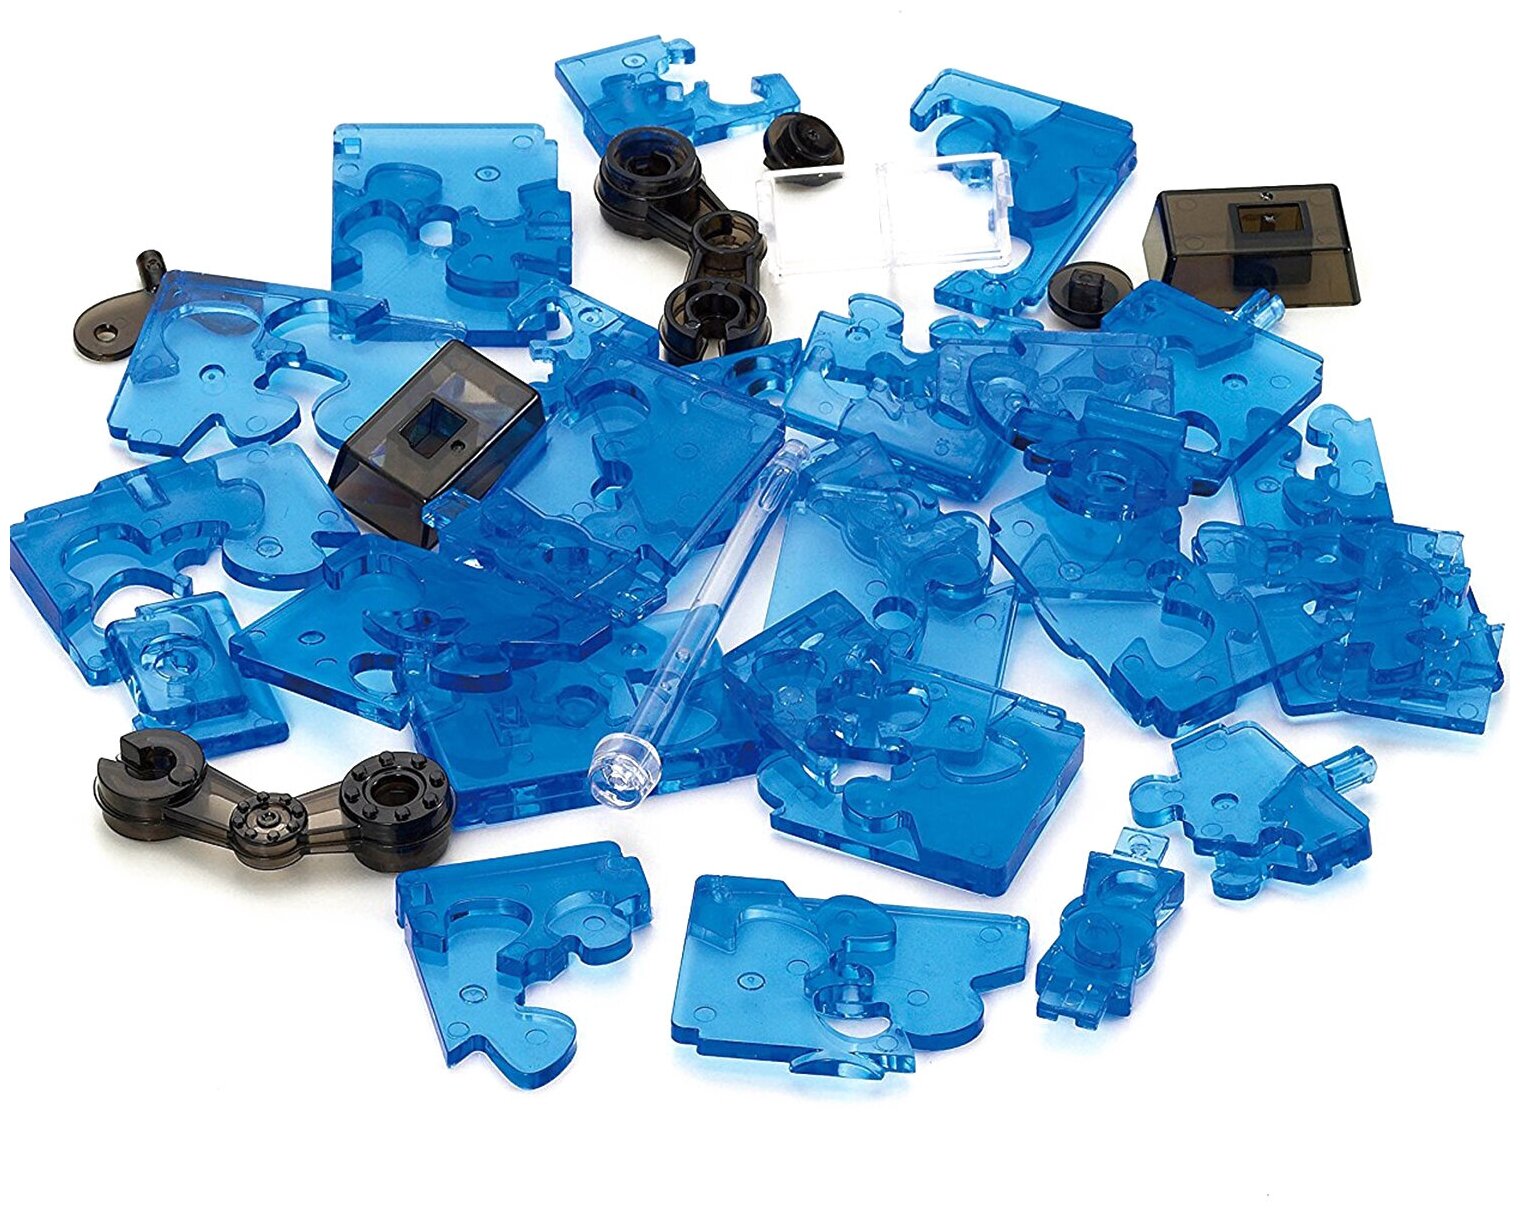 Головоломка 3D Crystal Puzzle Робот cиний цвет: синий - фото №5